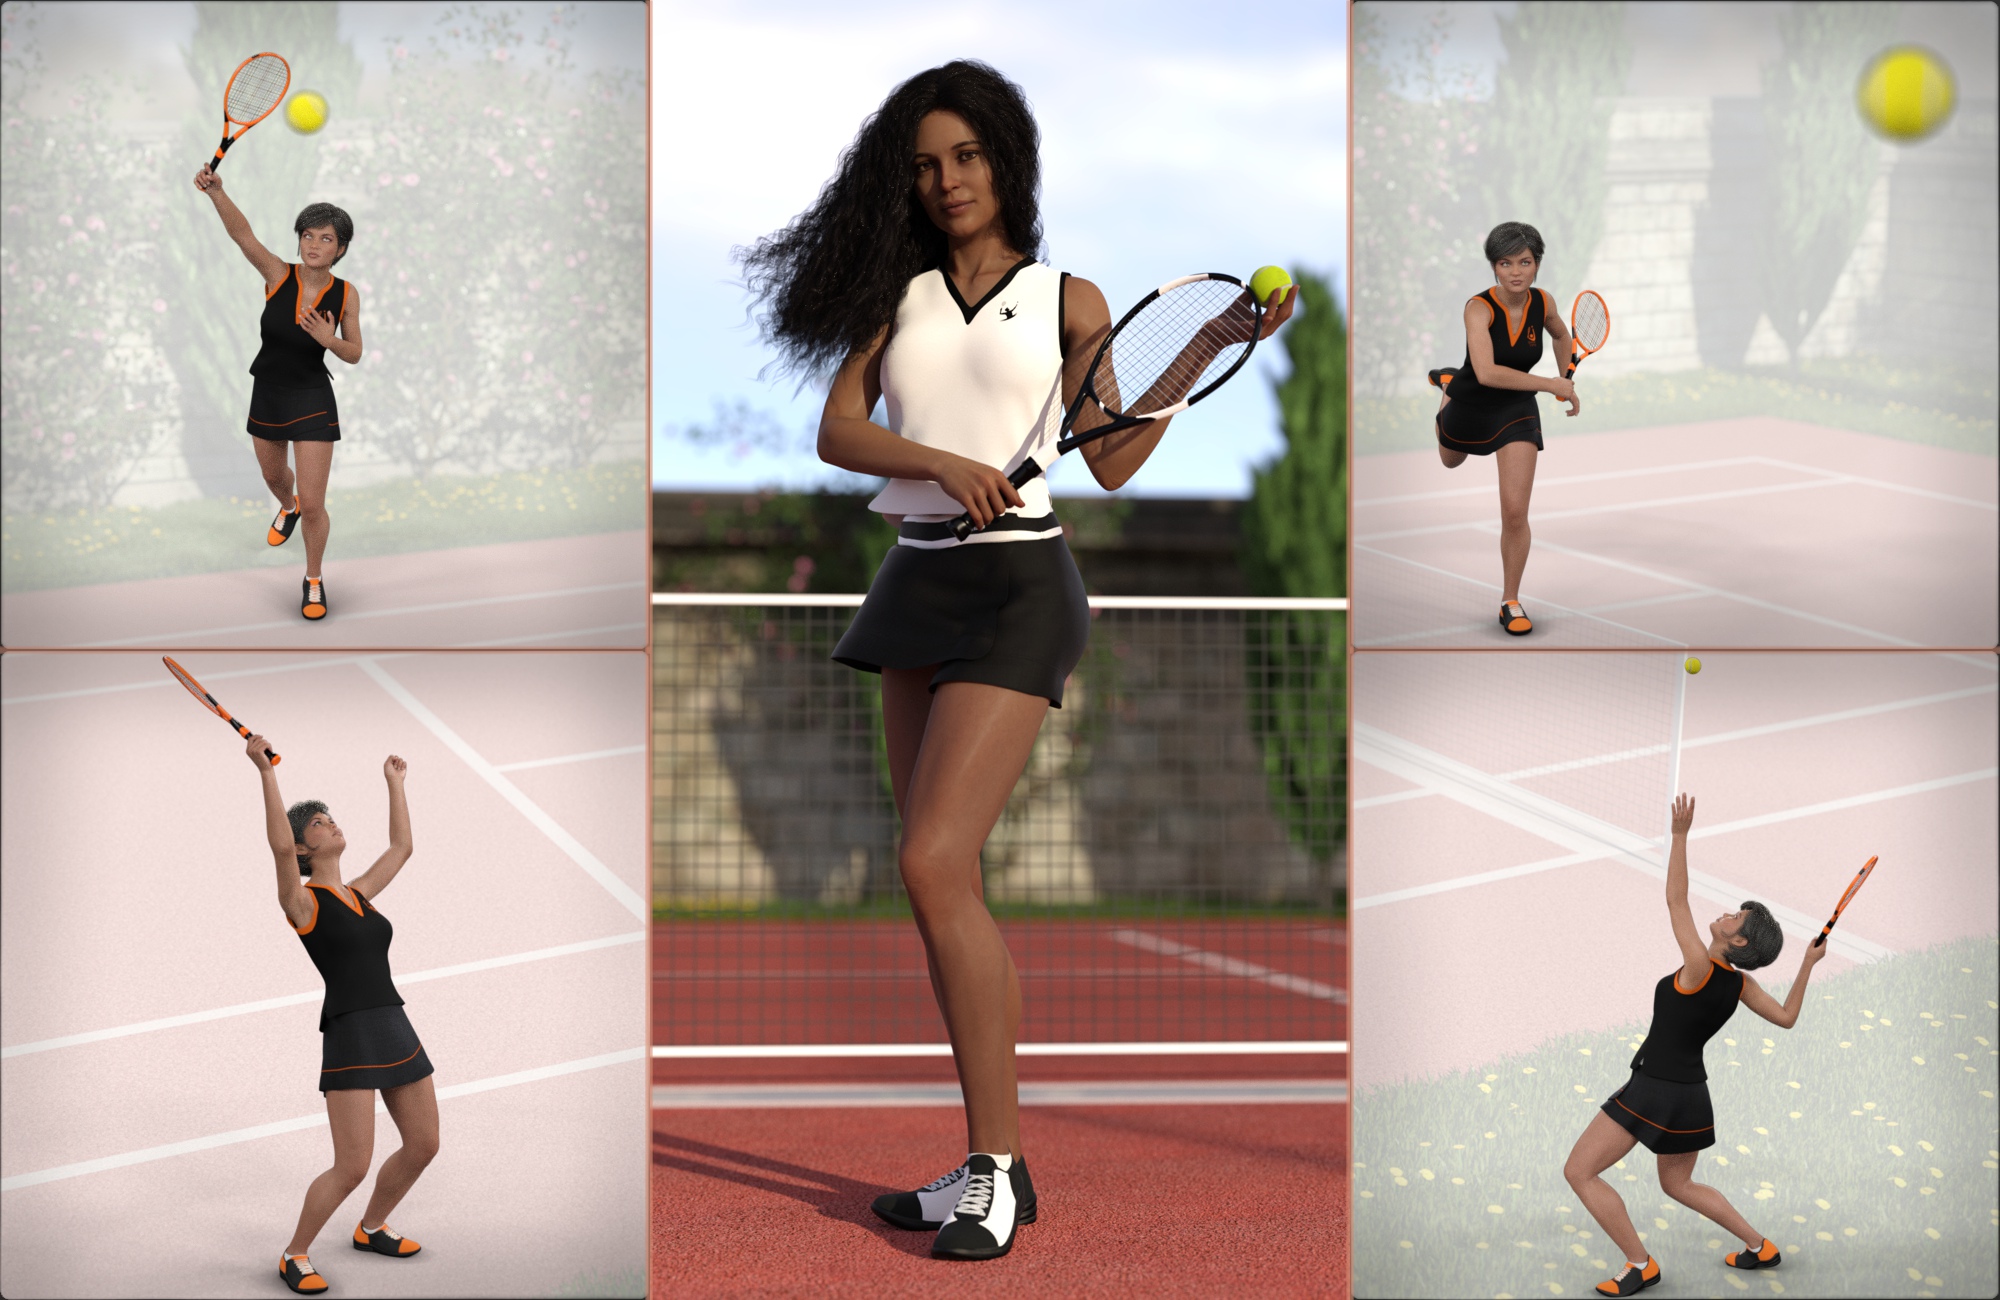 tennis poses zbrush